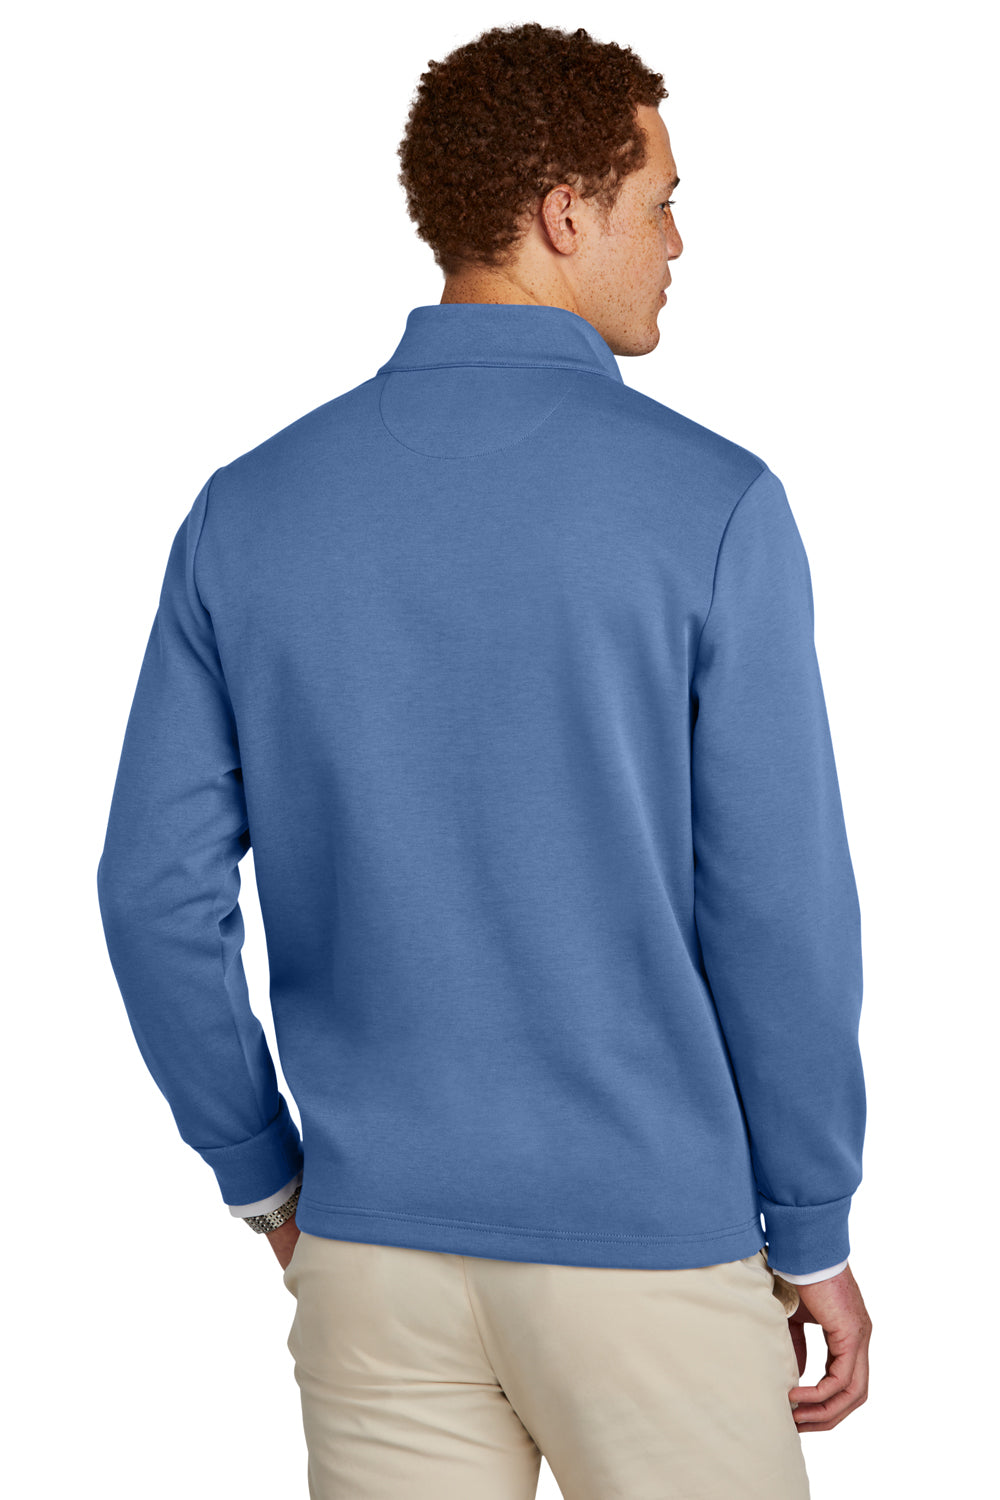 Brooks Brothers Mens Double Knit 1/4 Zip Sweatshirt Charter Blue Model Back